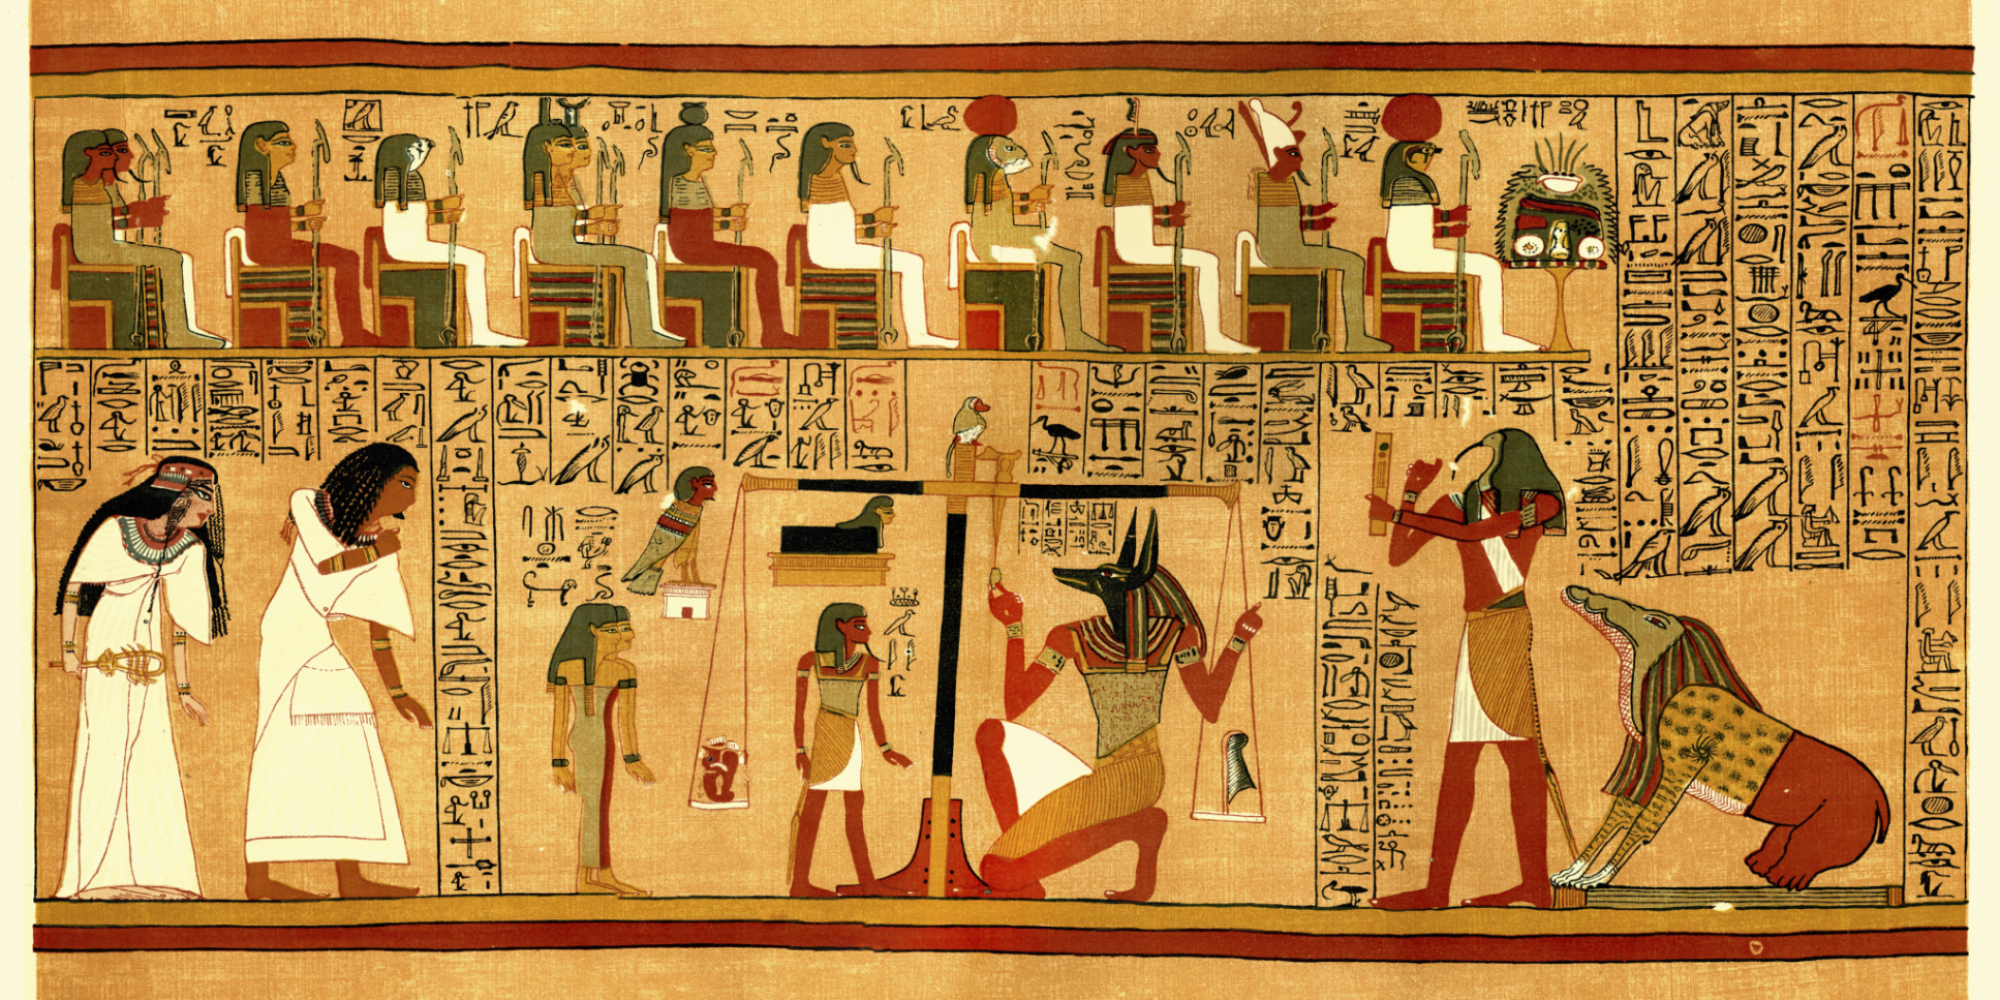 Ancient Egypt - St Mark's C of E Primary School